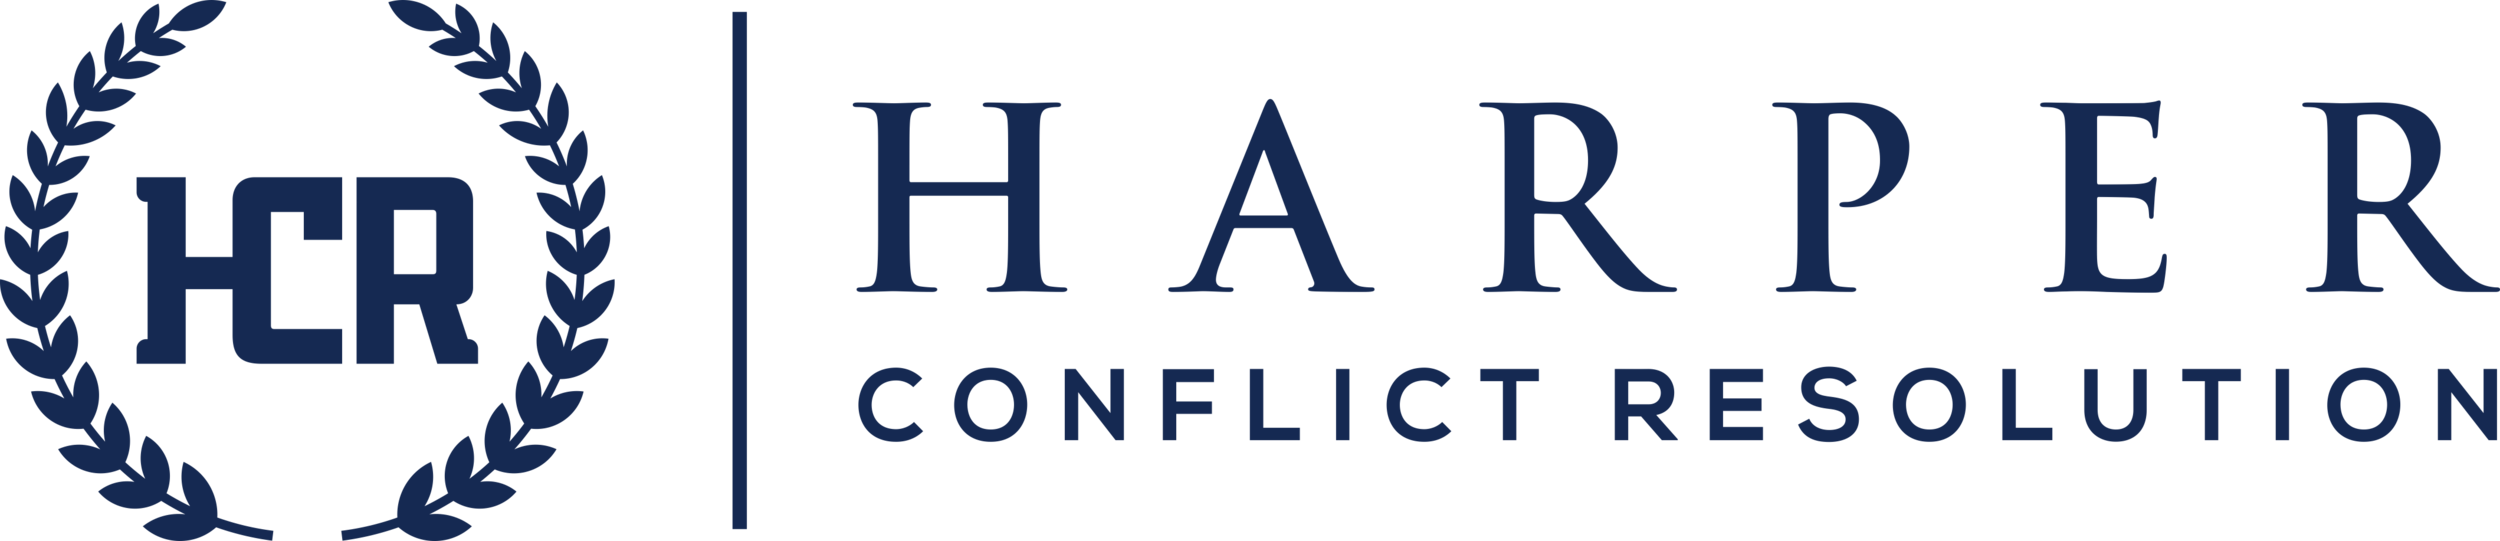 Harper Conflict Resolution